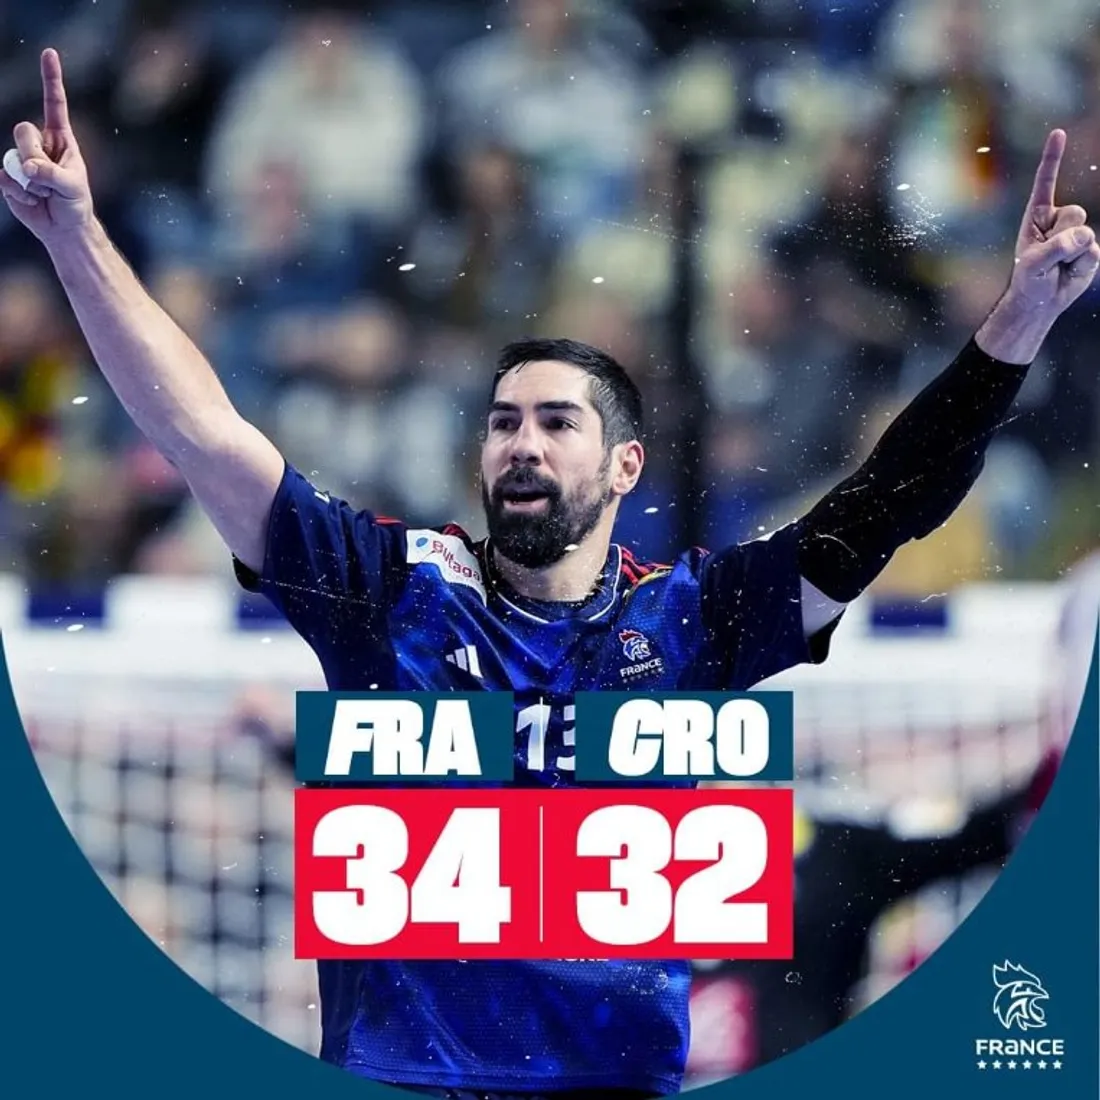 [ SPORT - HANDBALL ] Euro2024: La France écarte la Croatie 34-32